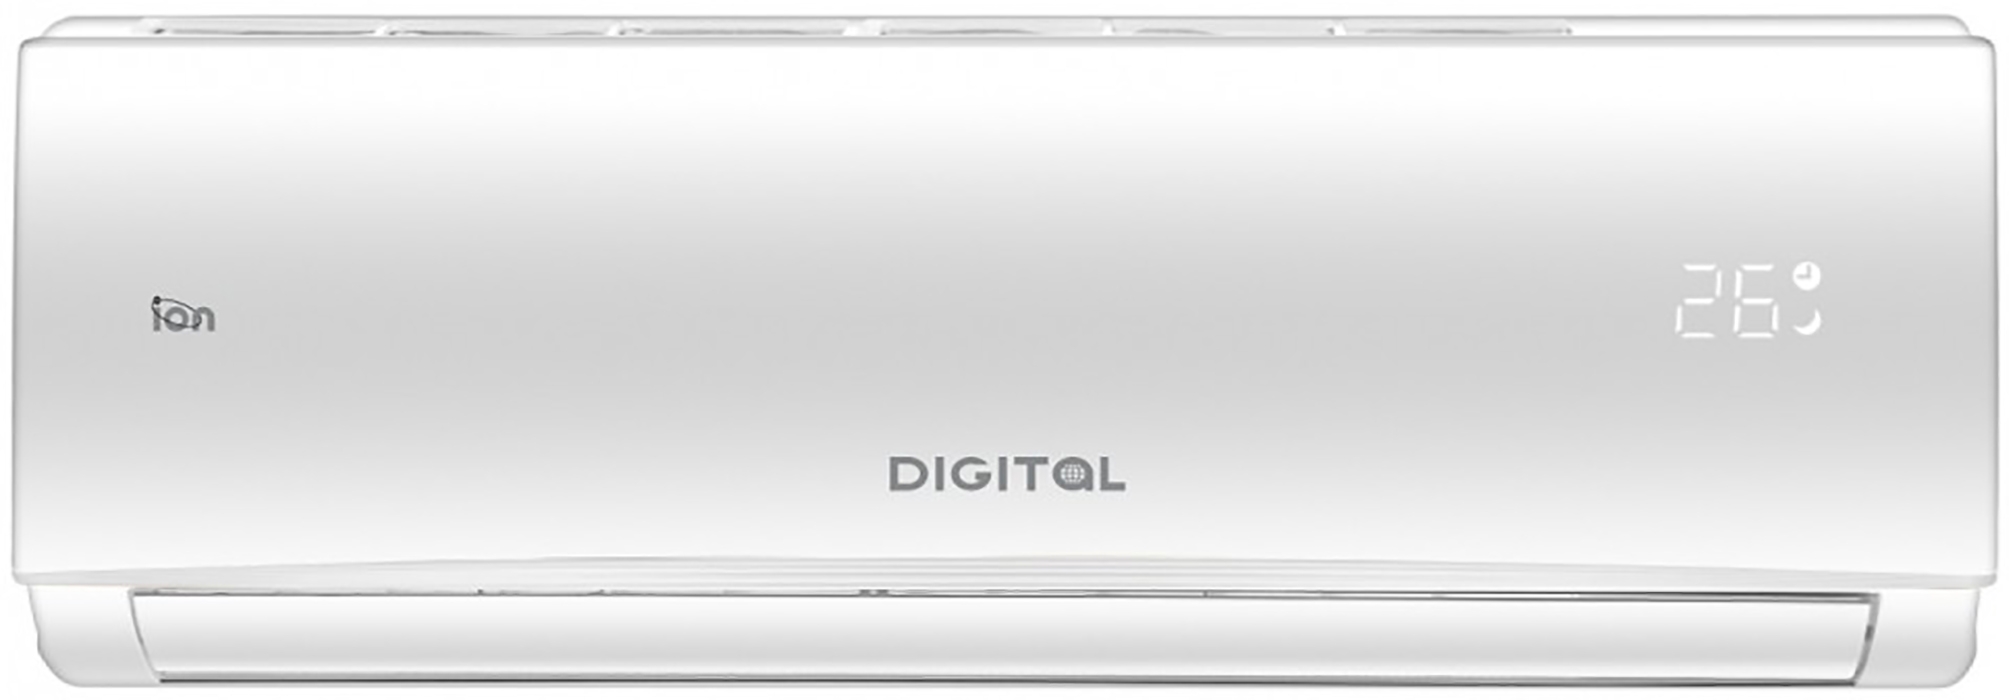 Кондиционер сплит-система Digital DAC-i24EWT (Wi-Fi ready) цена 0 грн - фотография 2